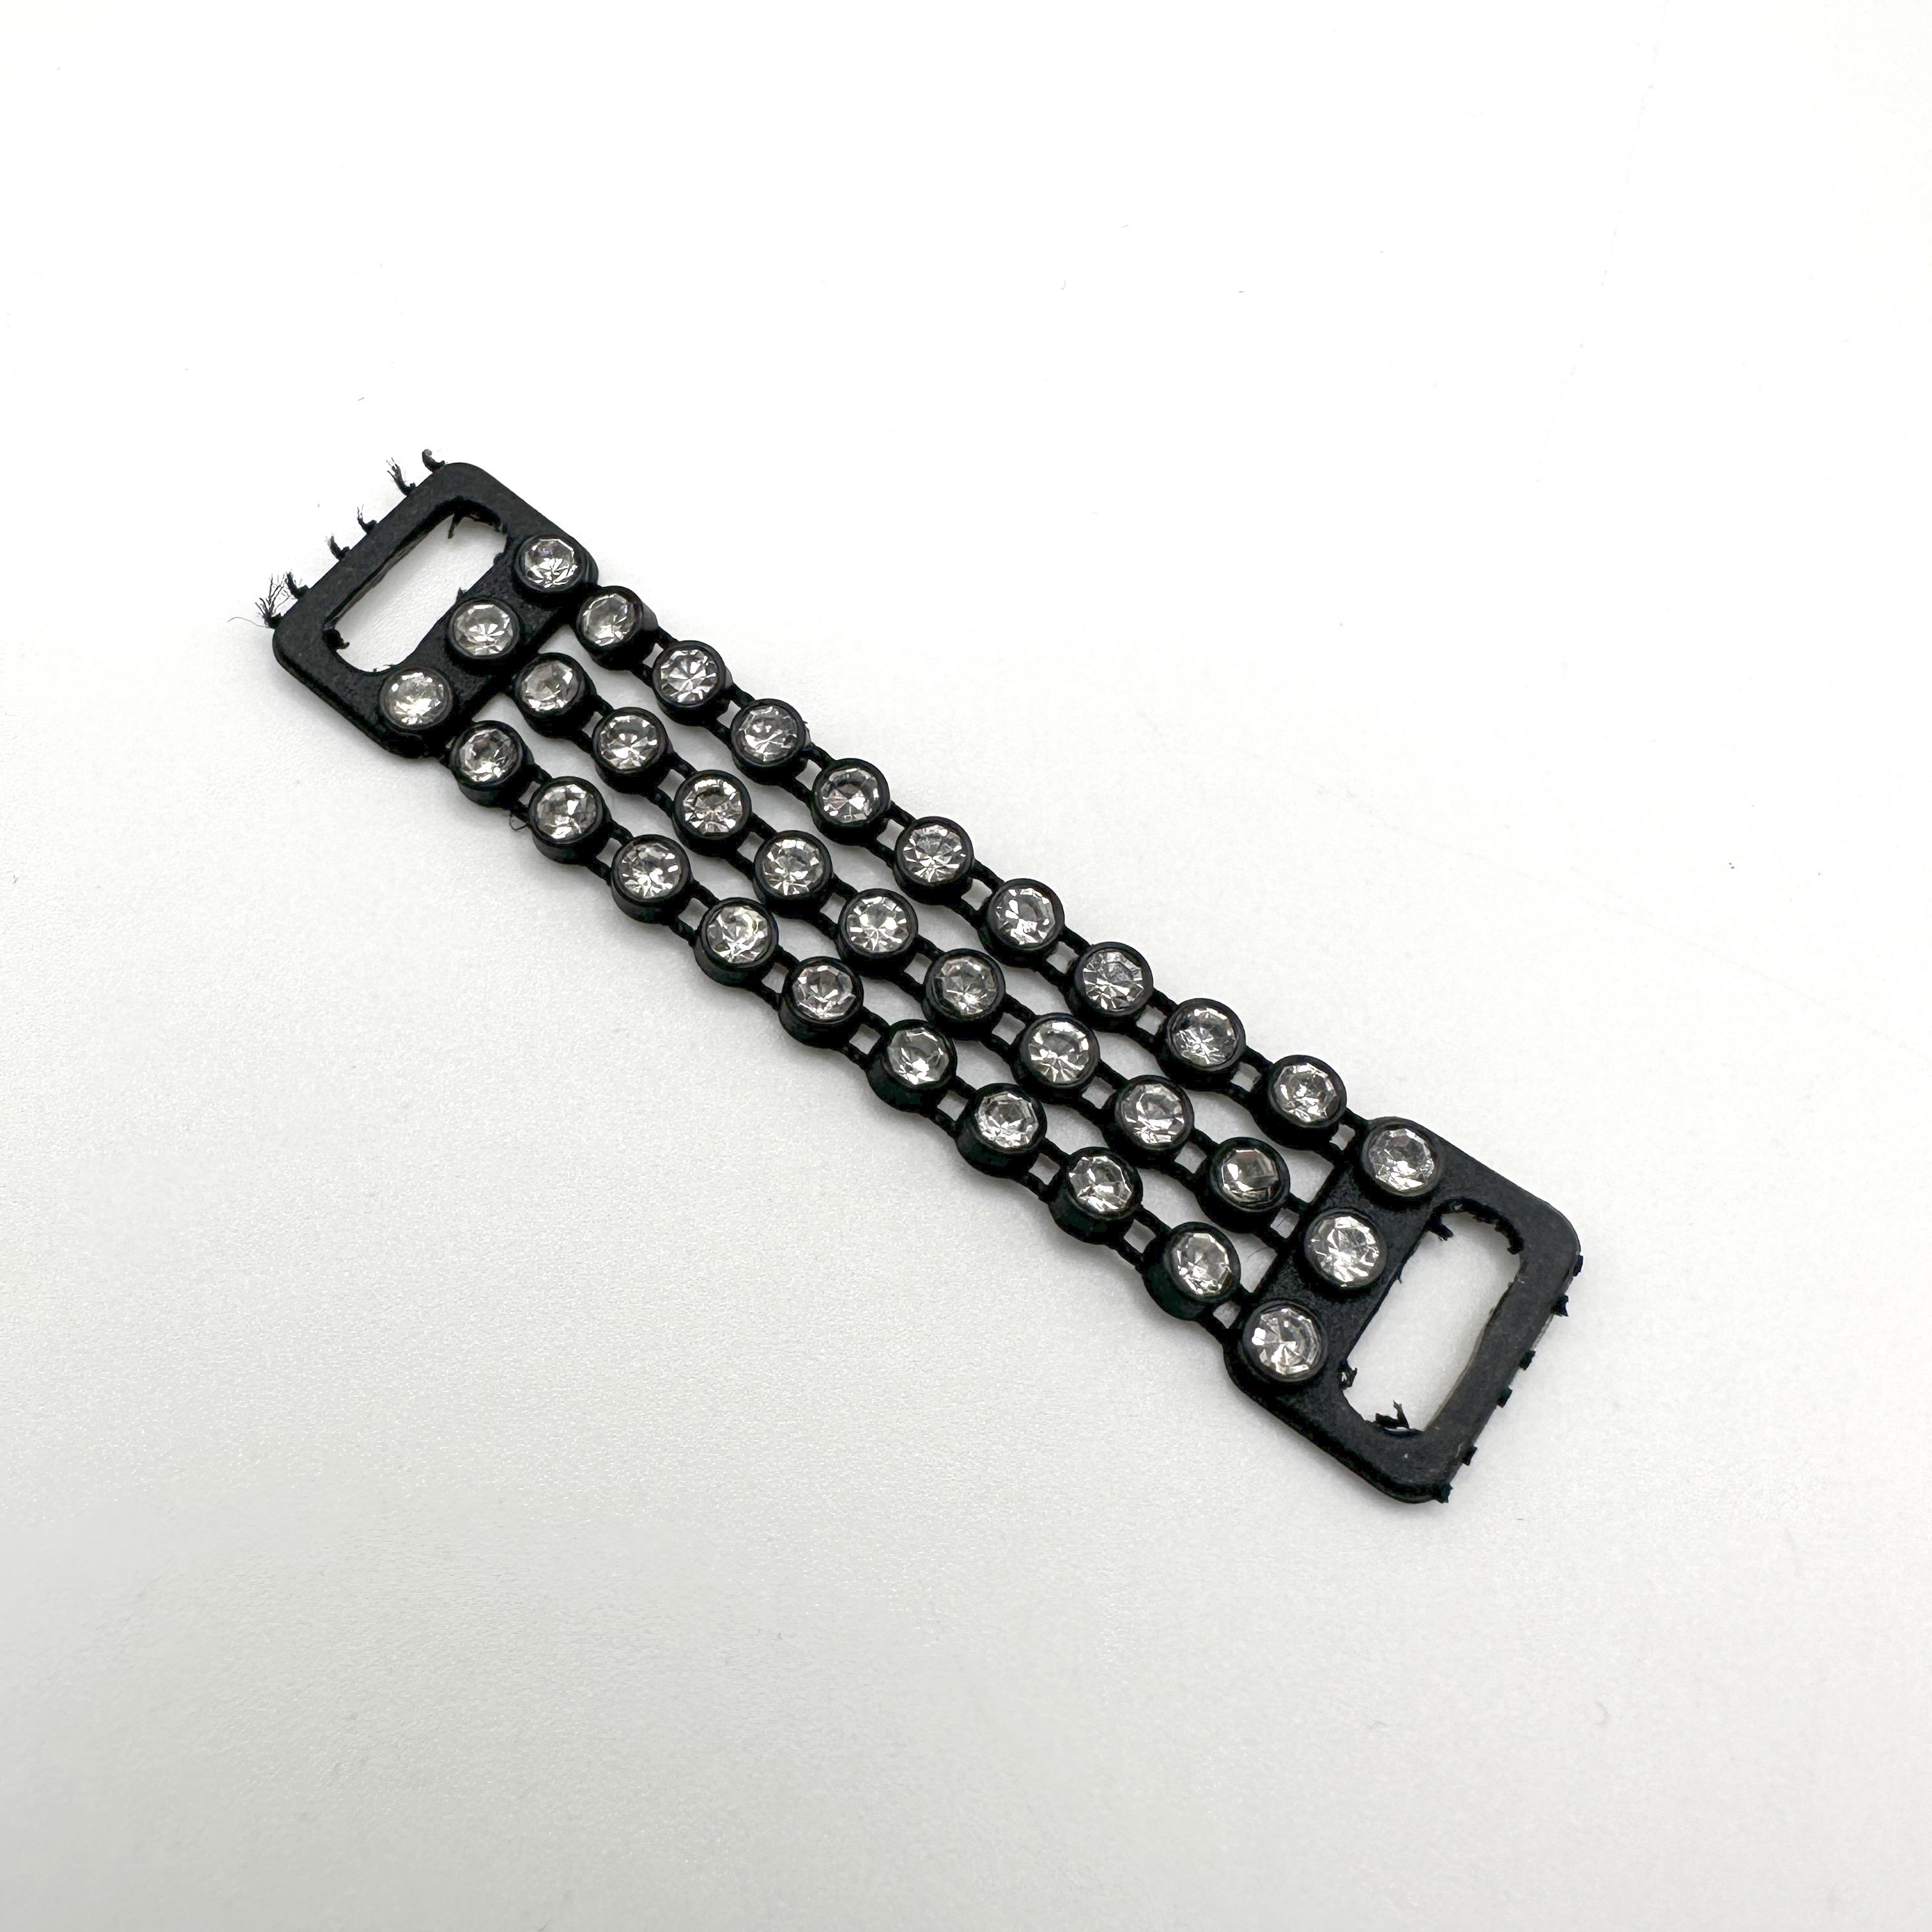 Bra Strap Trim - Sew-on Diamante - 13mm wide (3 rows) - for 10mm strap -  BLACK, each